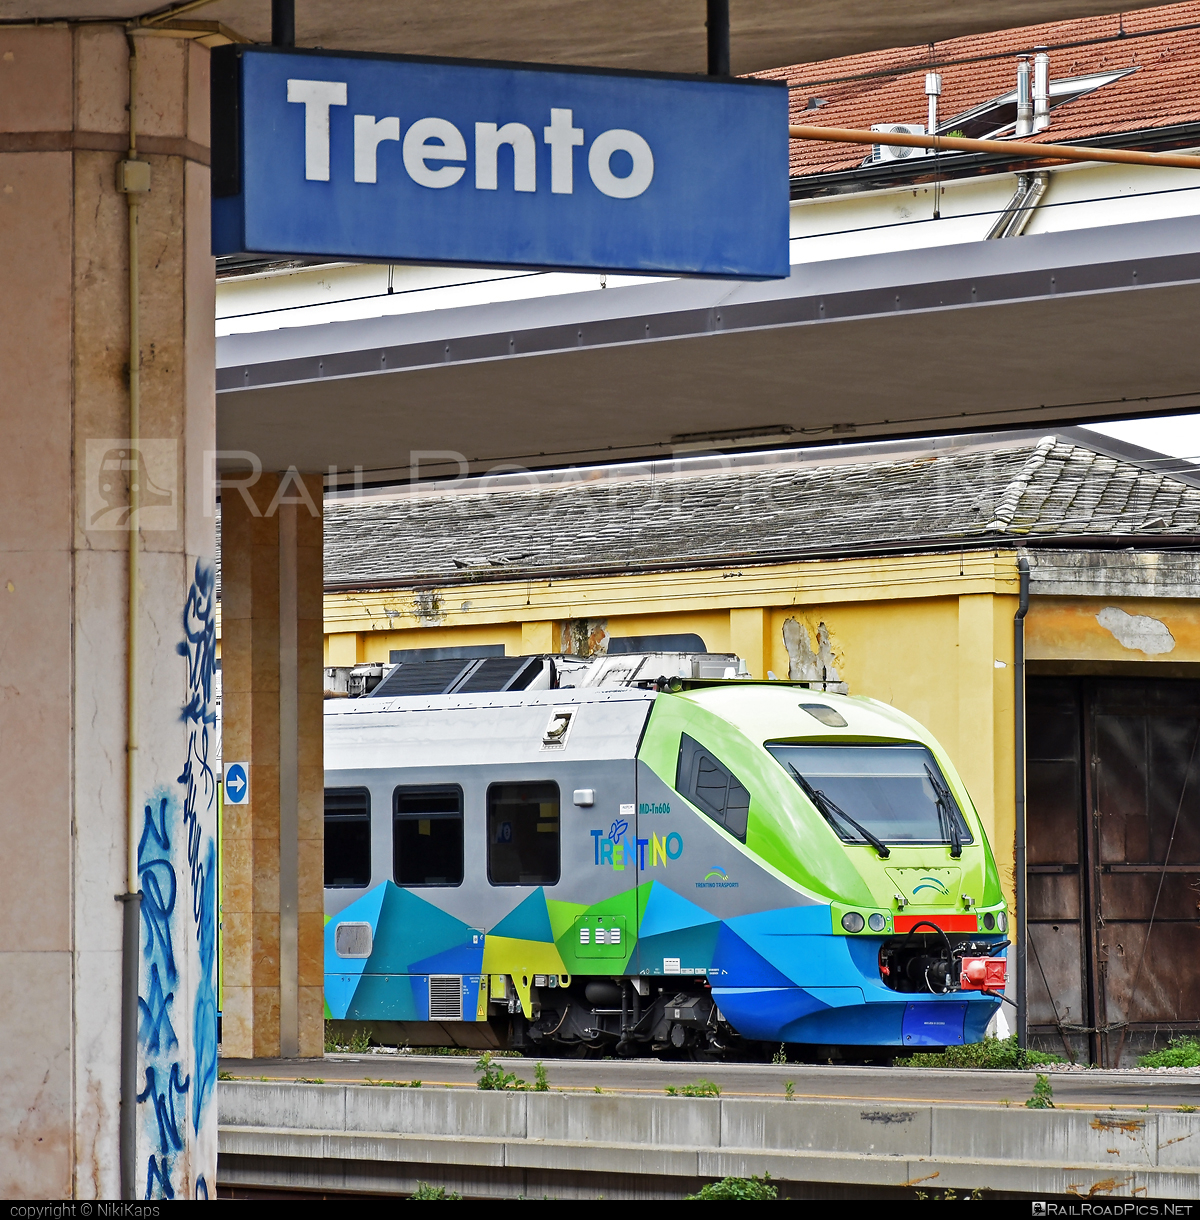 Alstom Minuetto - MD-Tn606 operated by Trentino Trasporti S.p.A #alstom #alstomminuetto #minuetto #trentino #trentinoTrasporti #trentinoTrasportiSpA